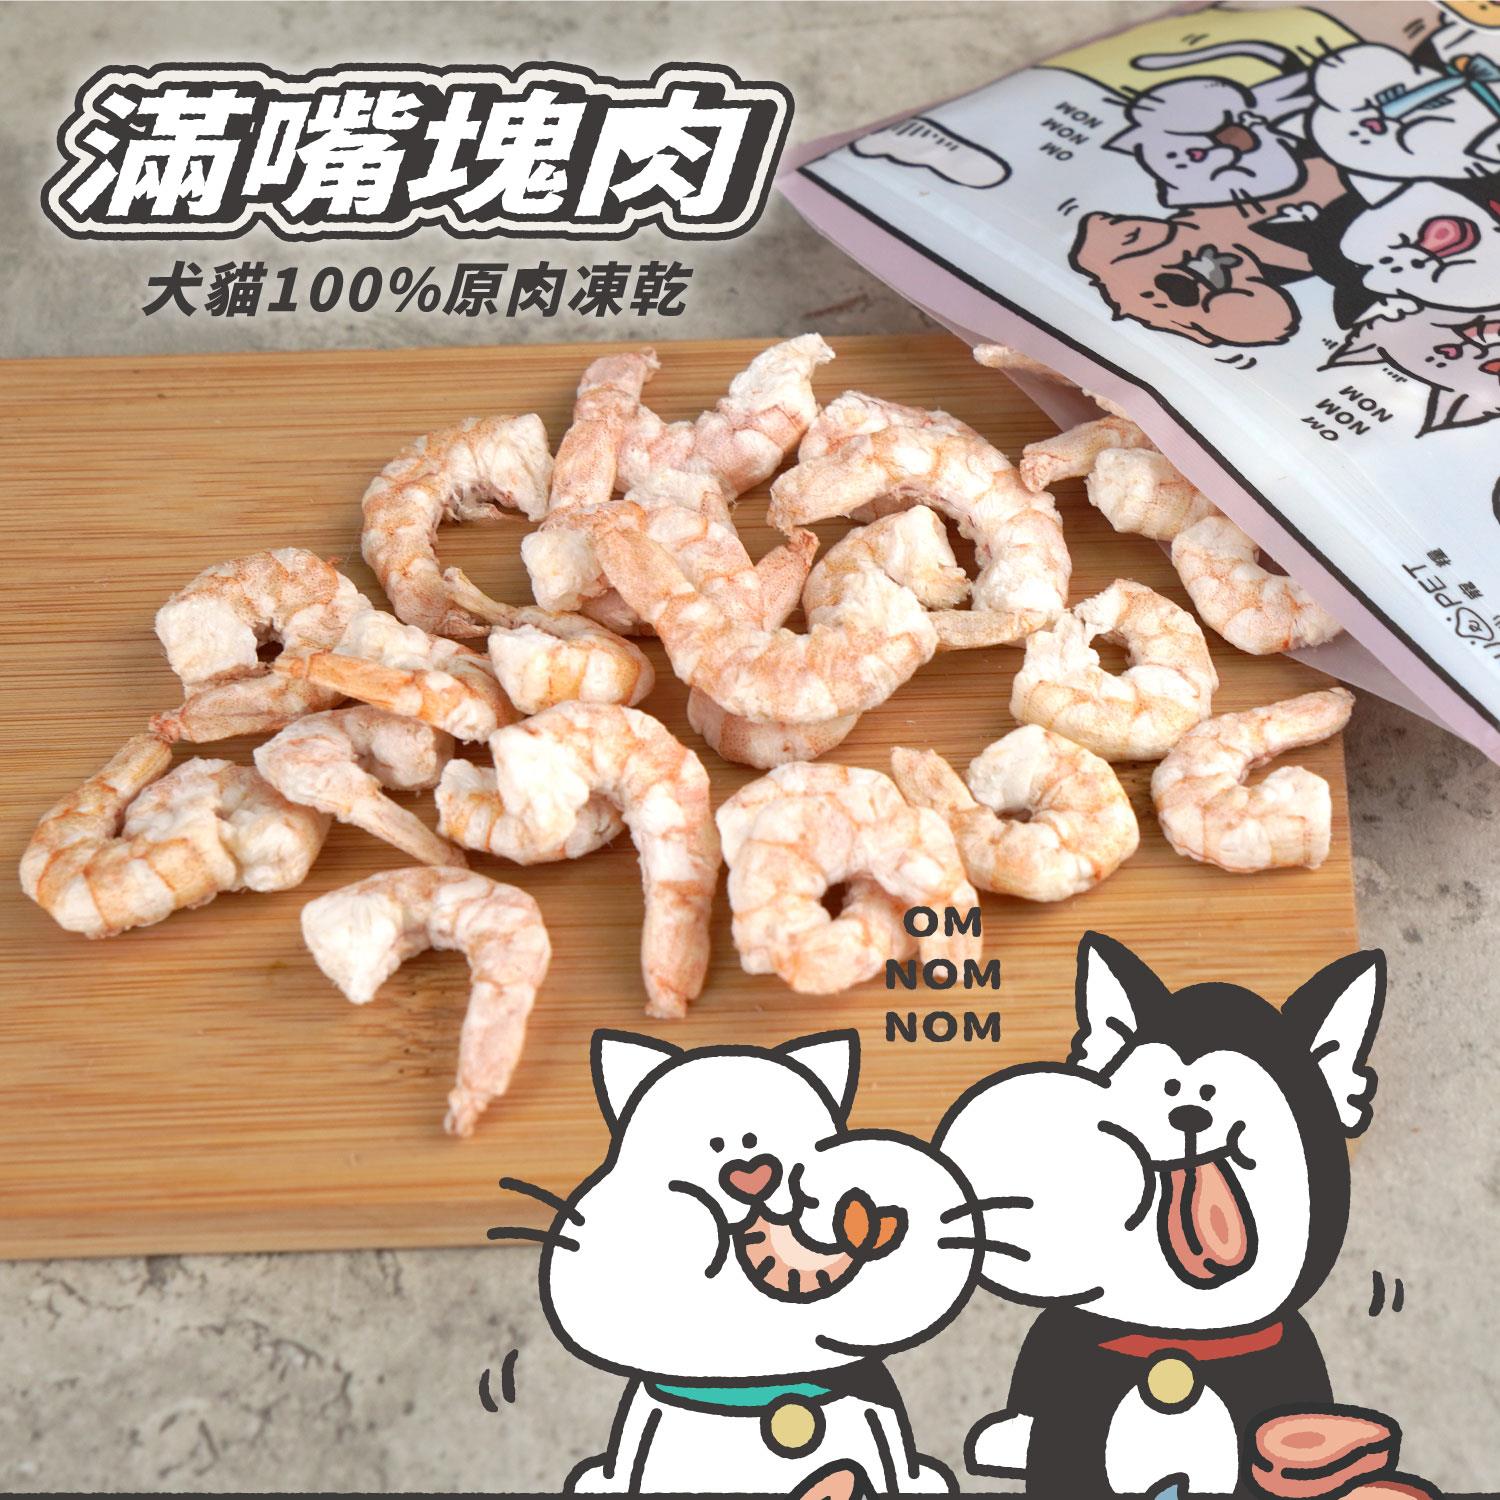 nu-treat-shrimp-intro1.jpg